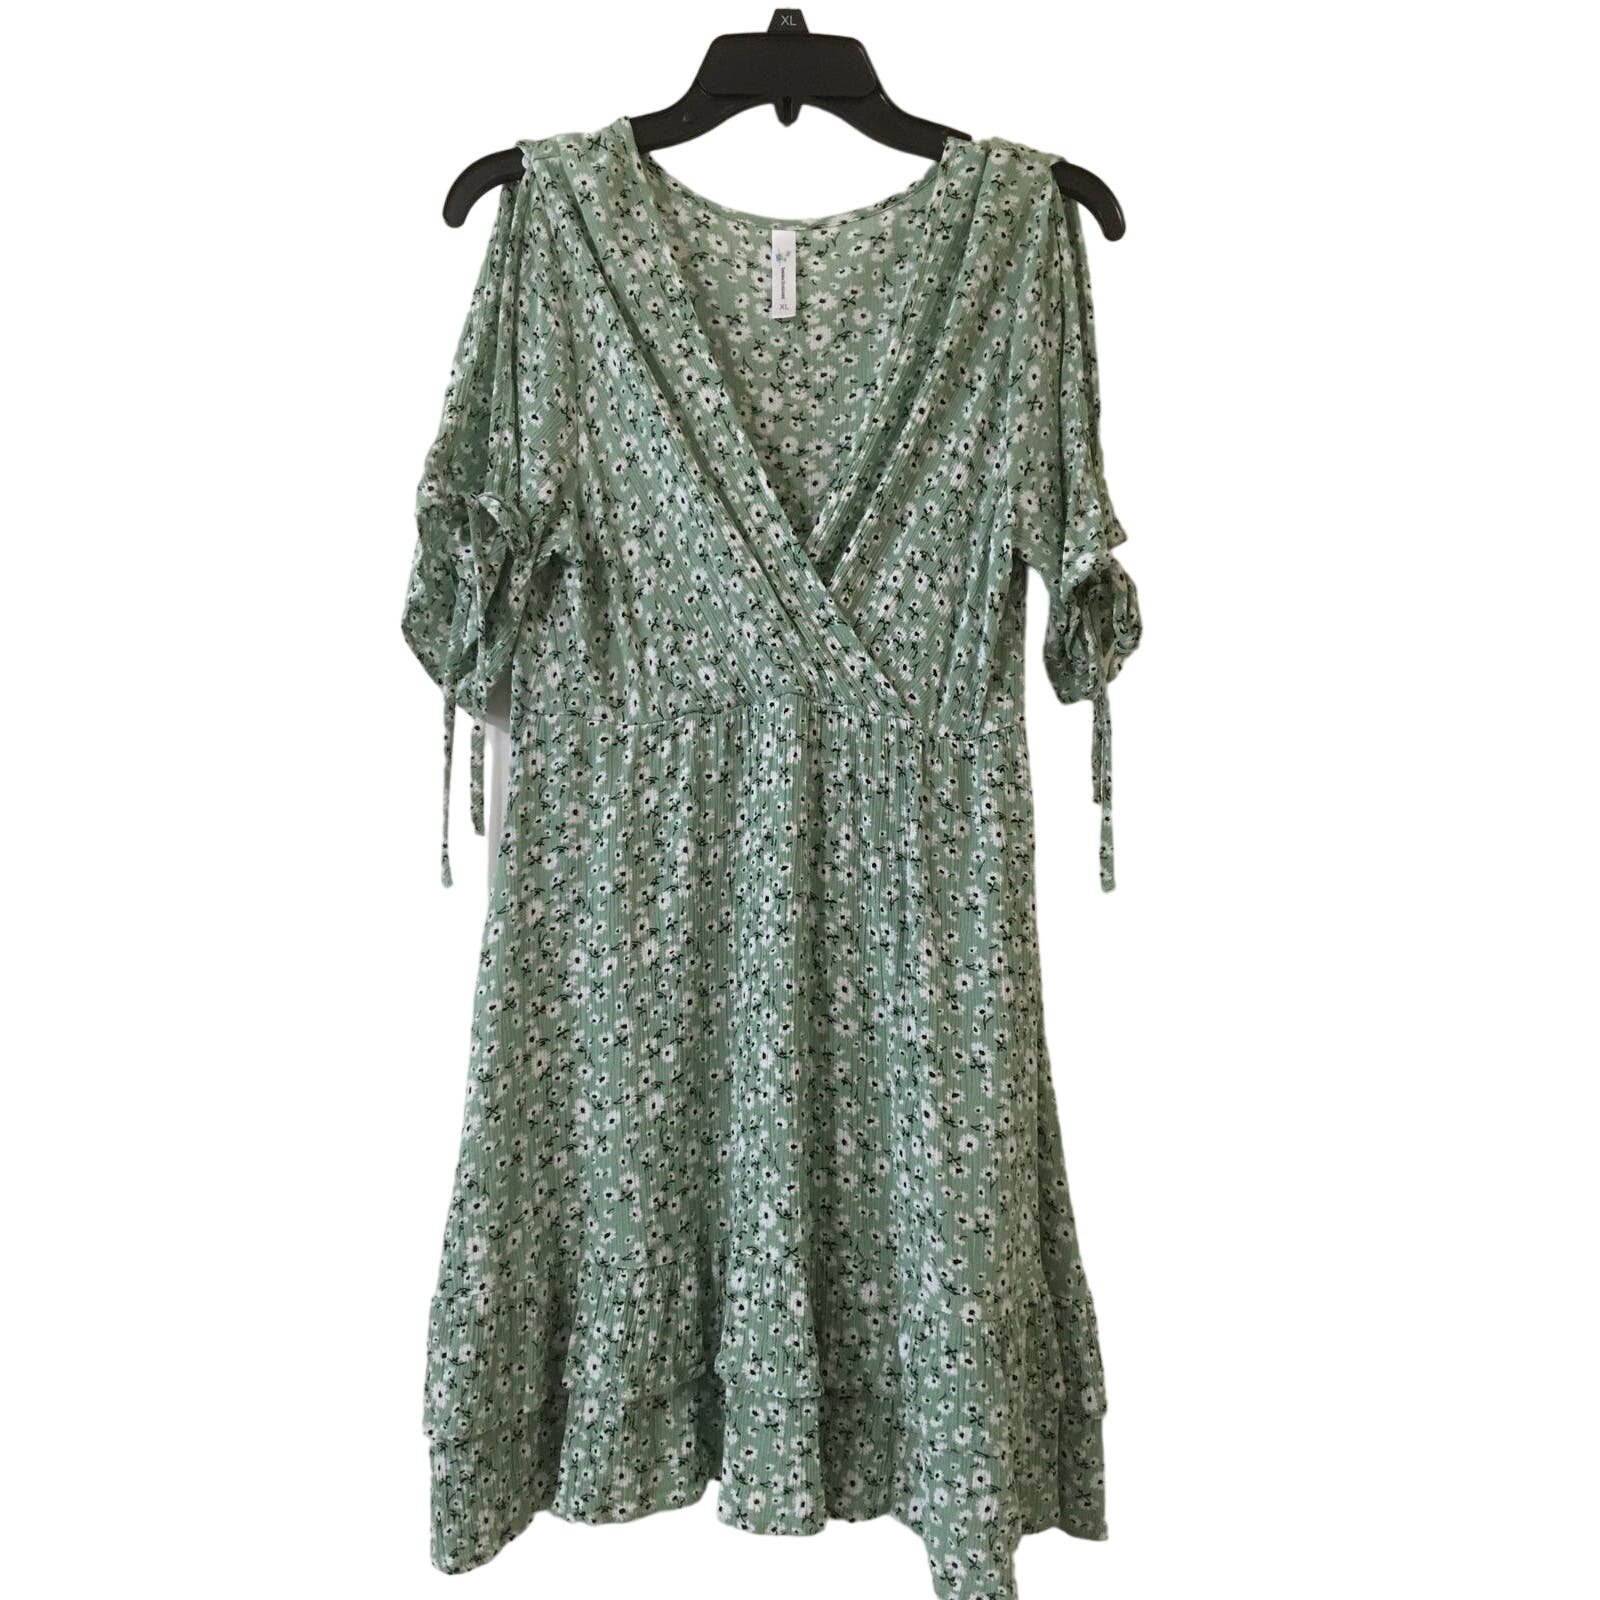 Buy Beachsissi Cold Shoulder M or L Dress Cover Up Ruffled Hem Green & White Floral NSkFalZdE hot sale